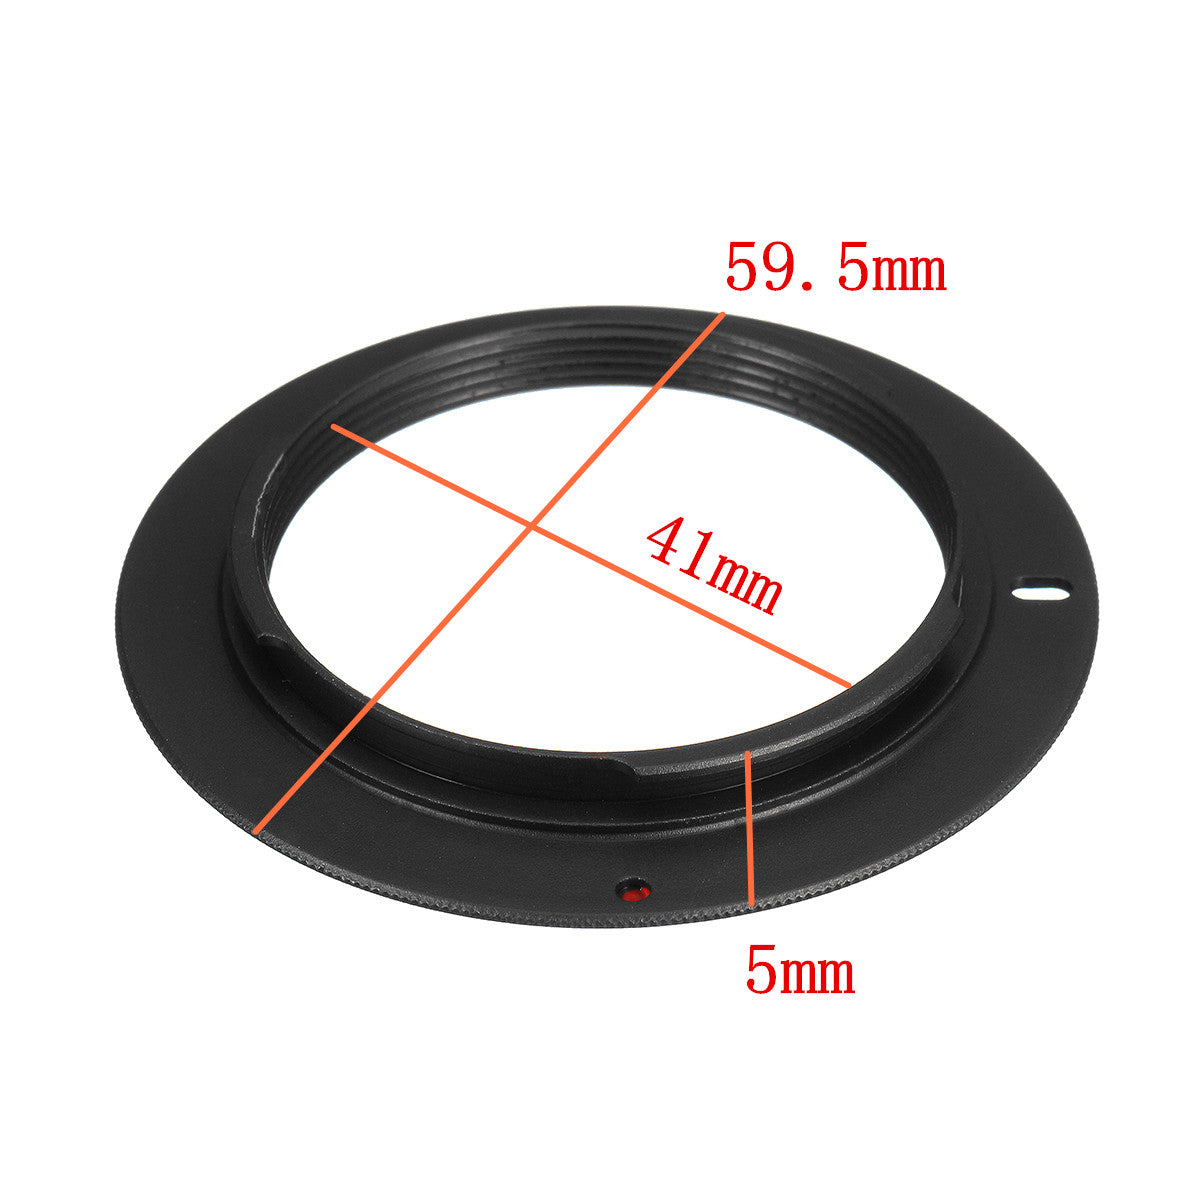 Adapter Ring for M42 Lens To AI Lenses Nikon F D70s D3100 D100 D7000 D5100 D80